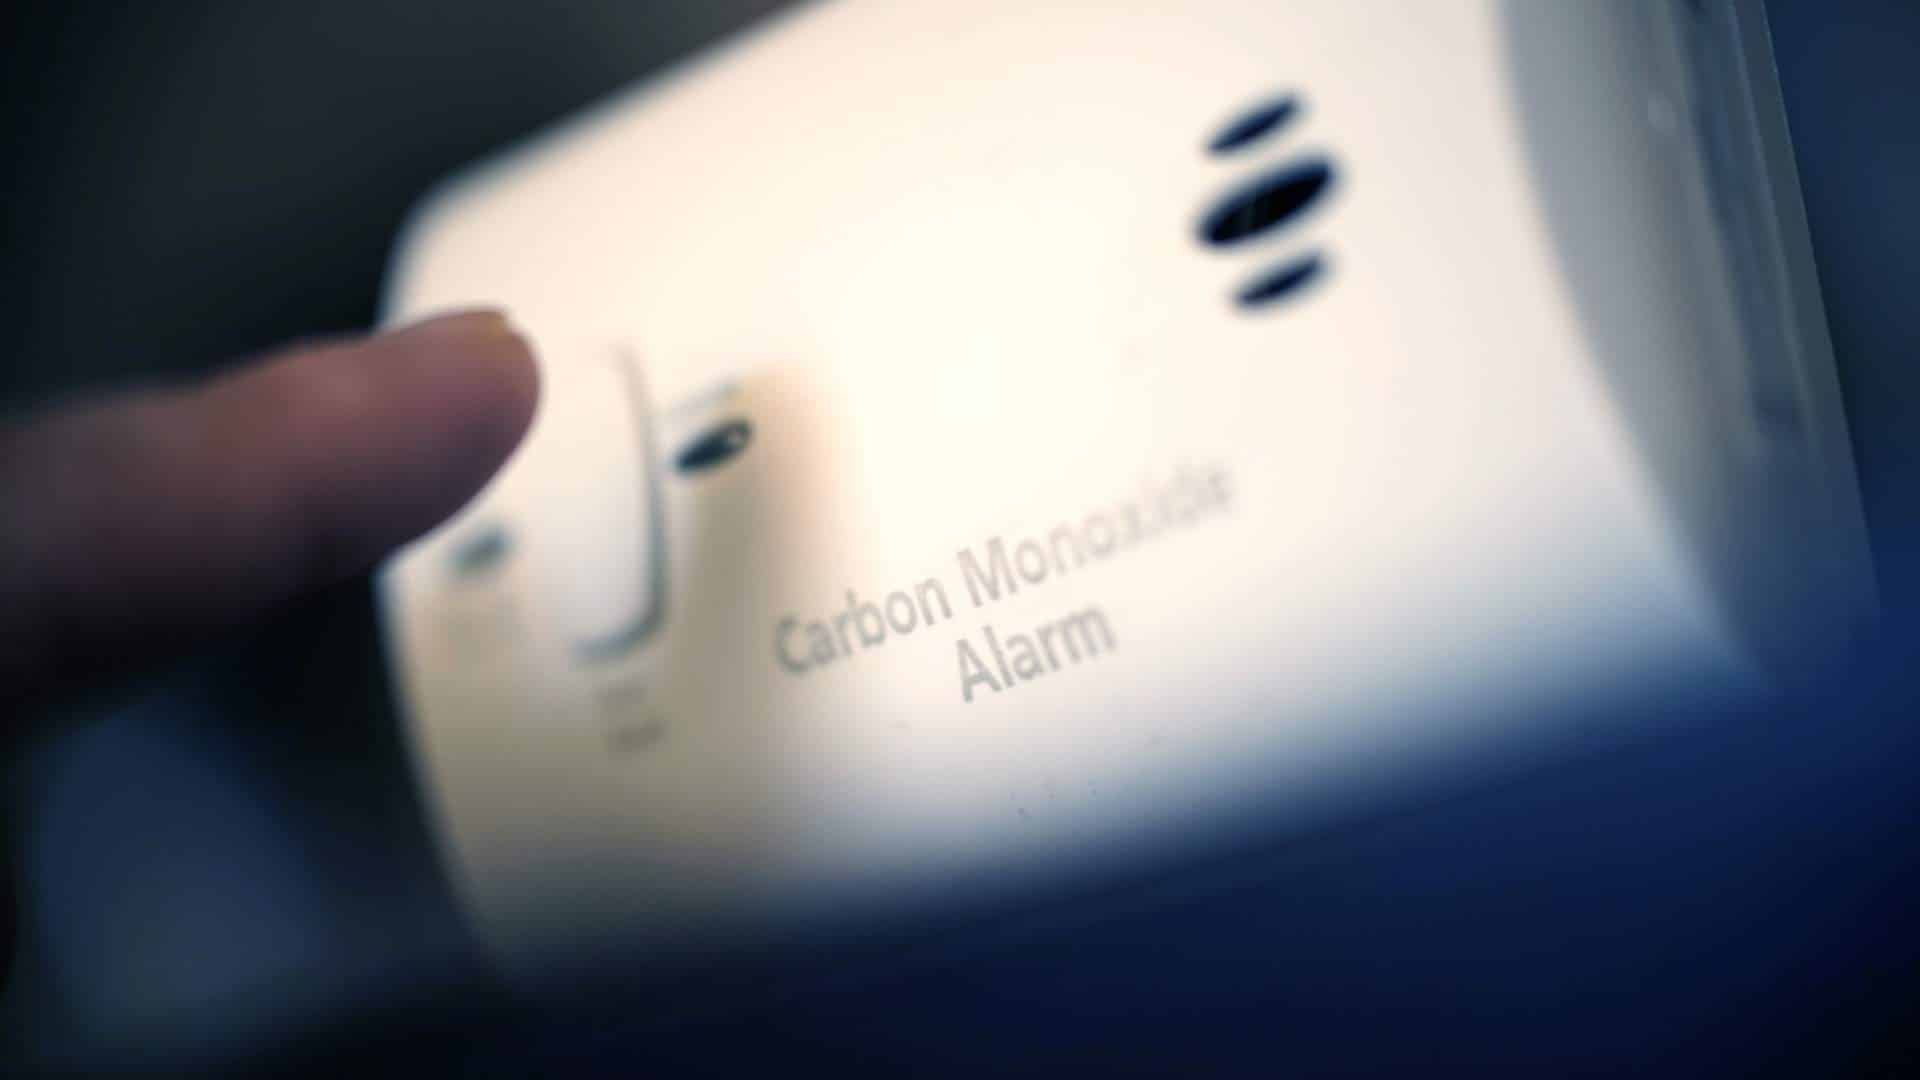 Regulation change regarding carbon monoxide alarms